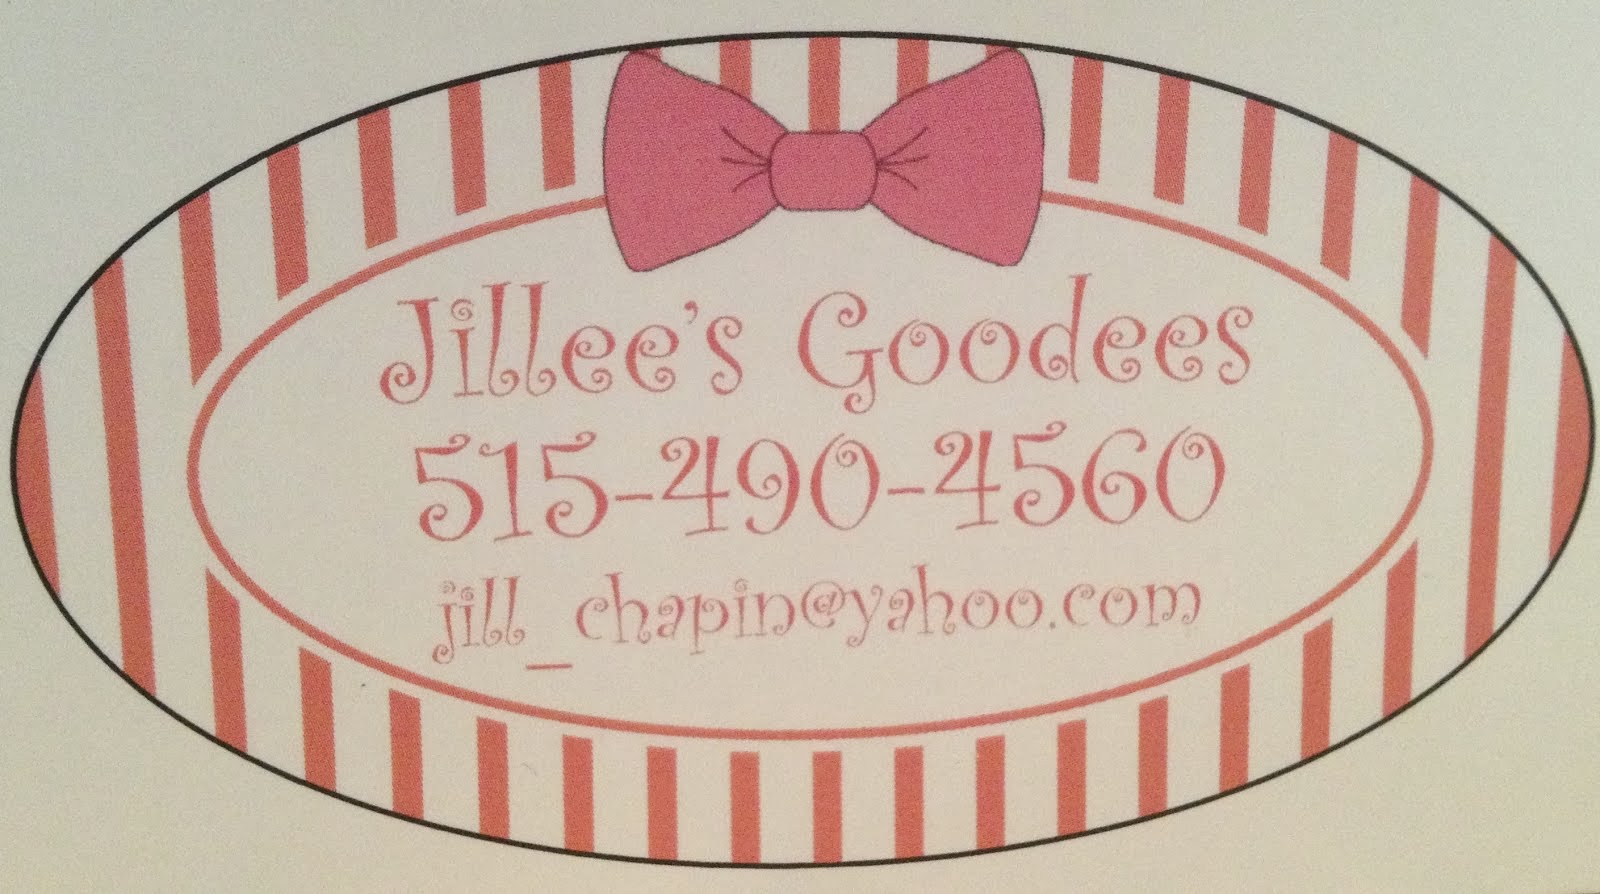 Jillee's Goodees